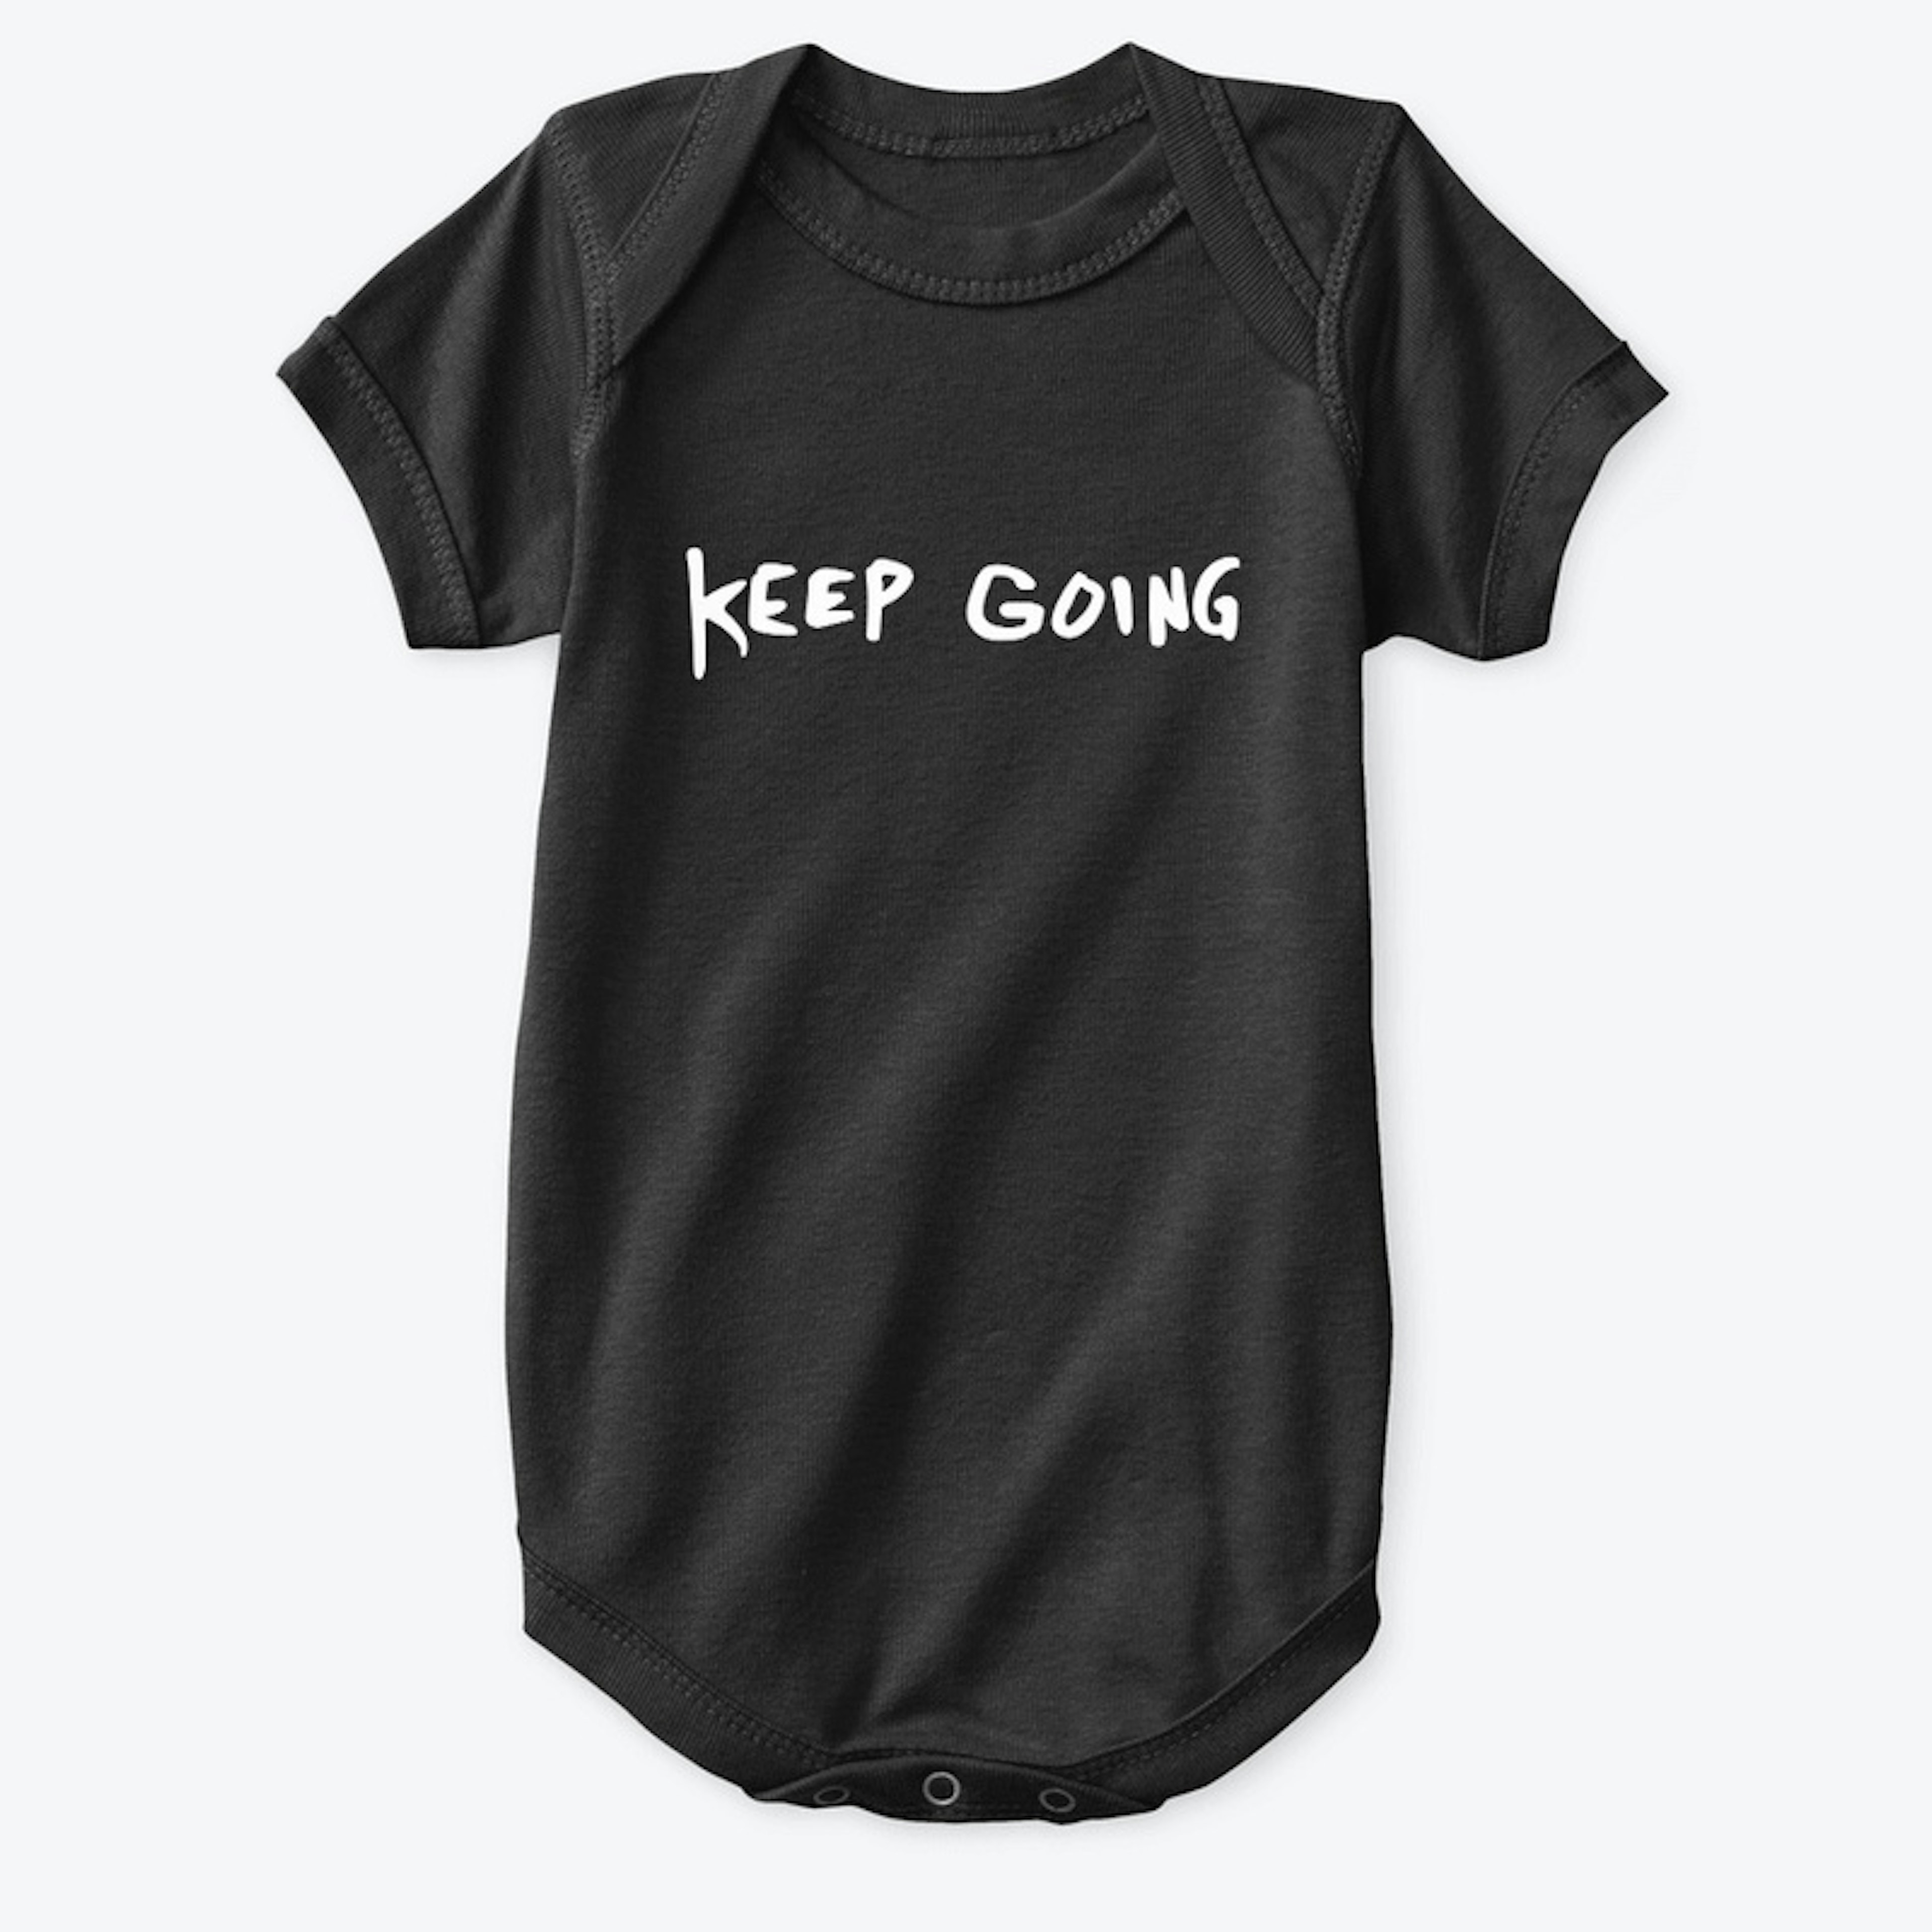 Keep Going - Baby Premium Onesie